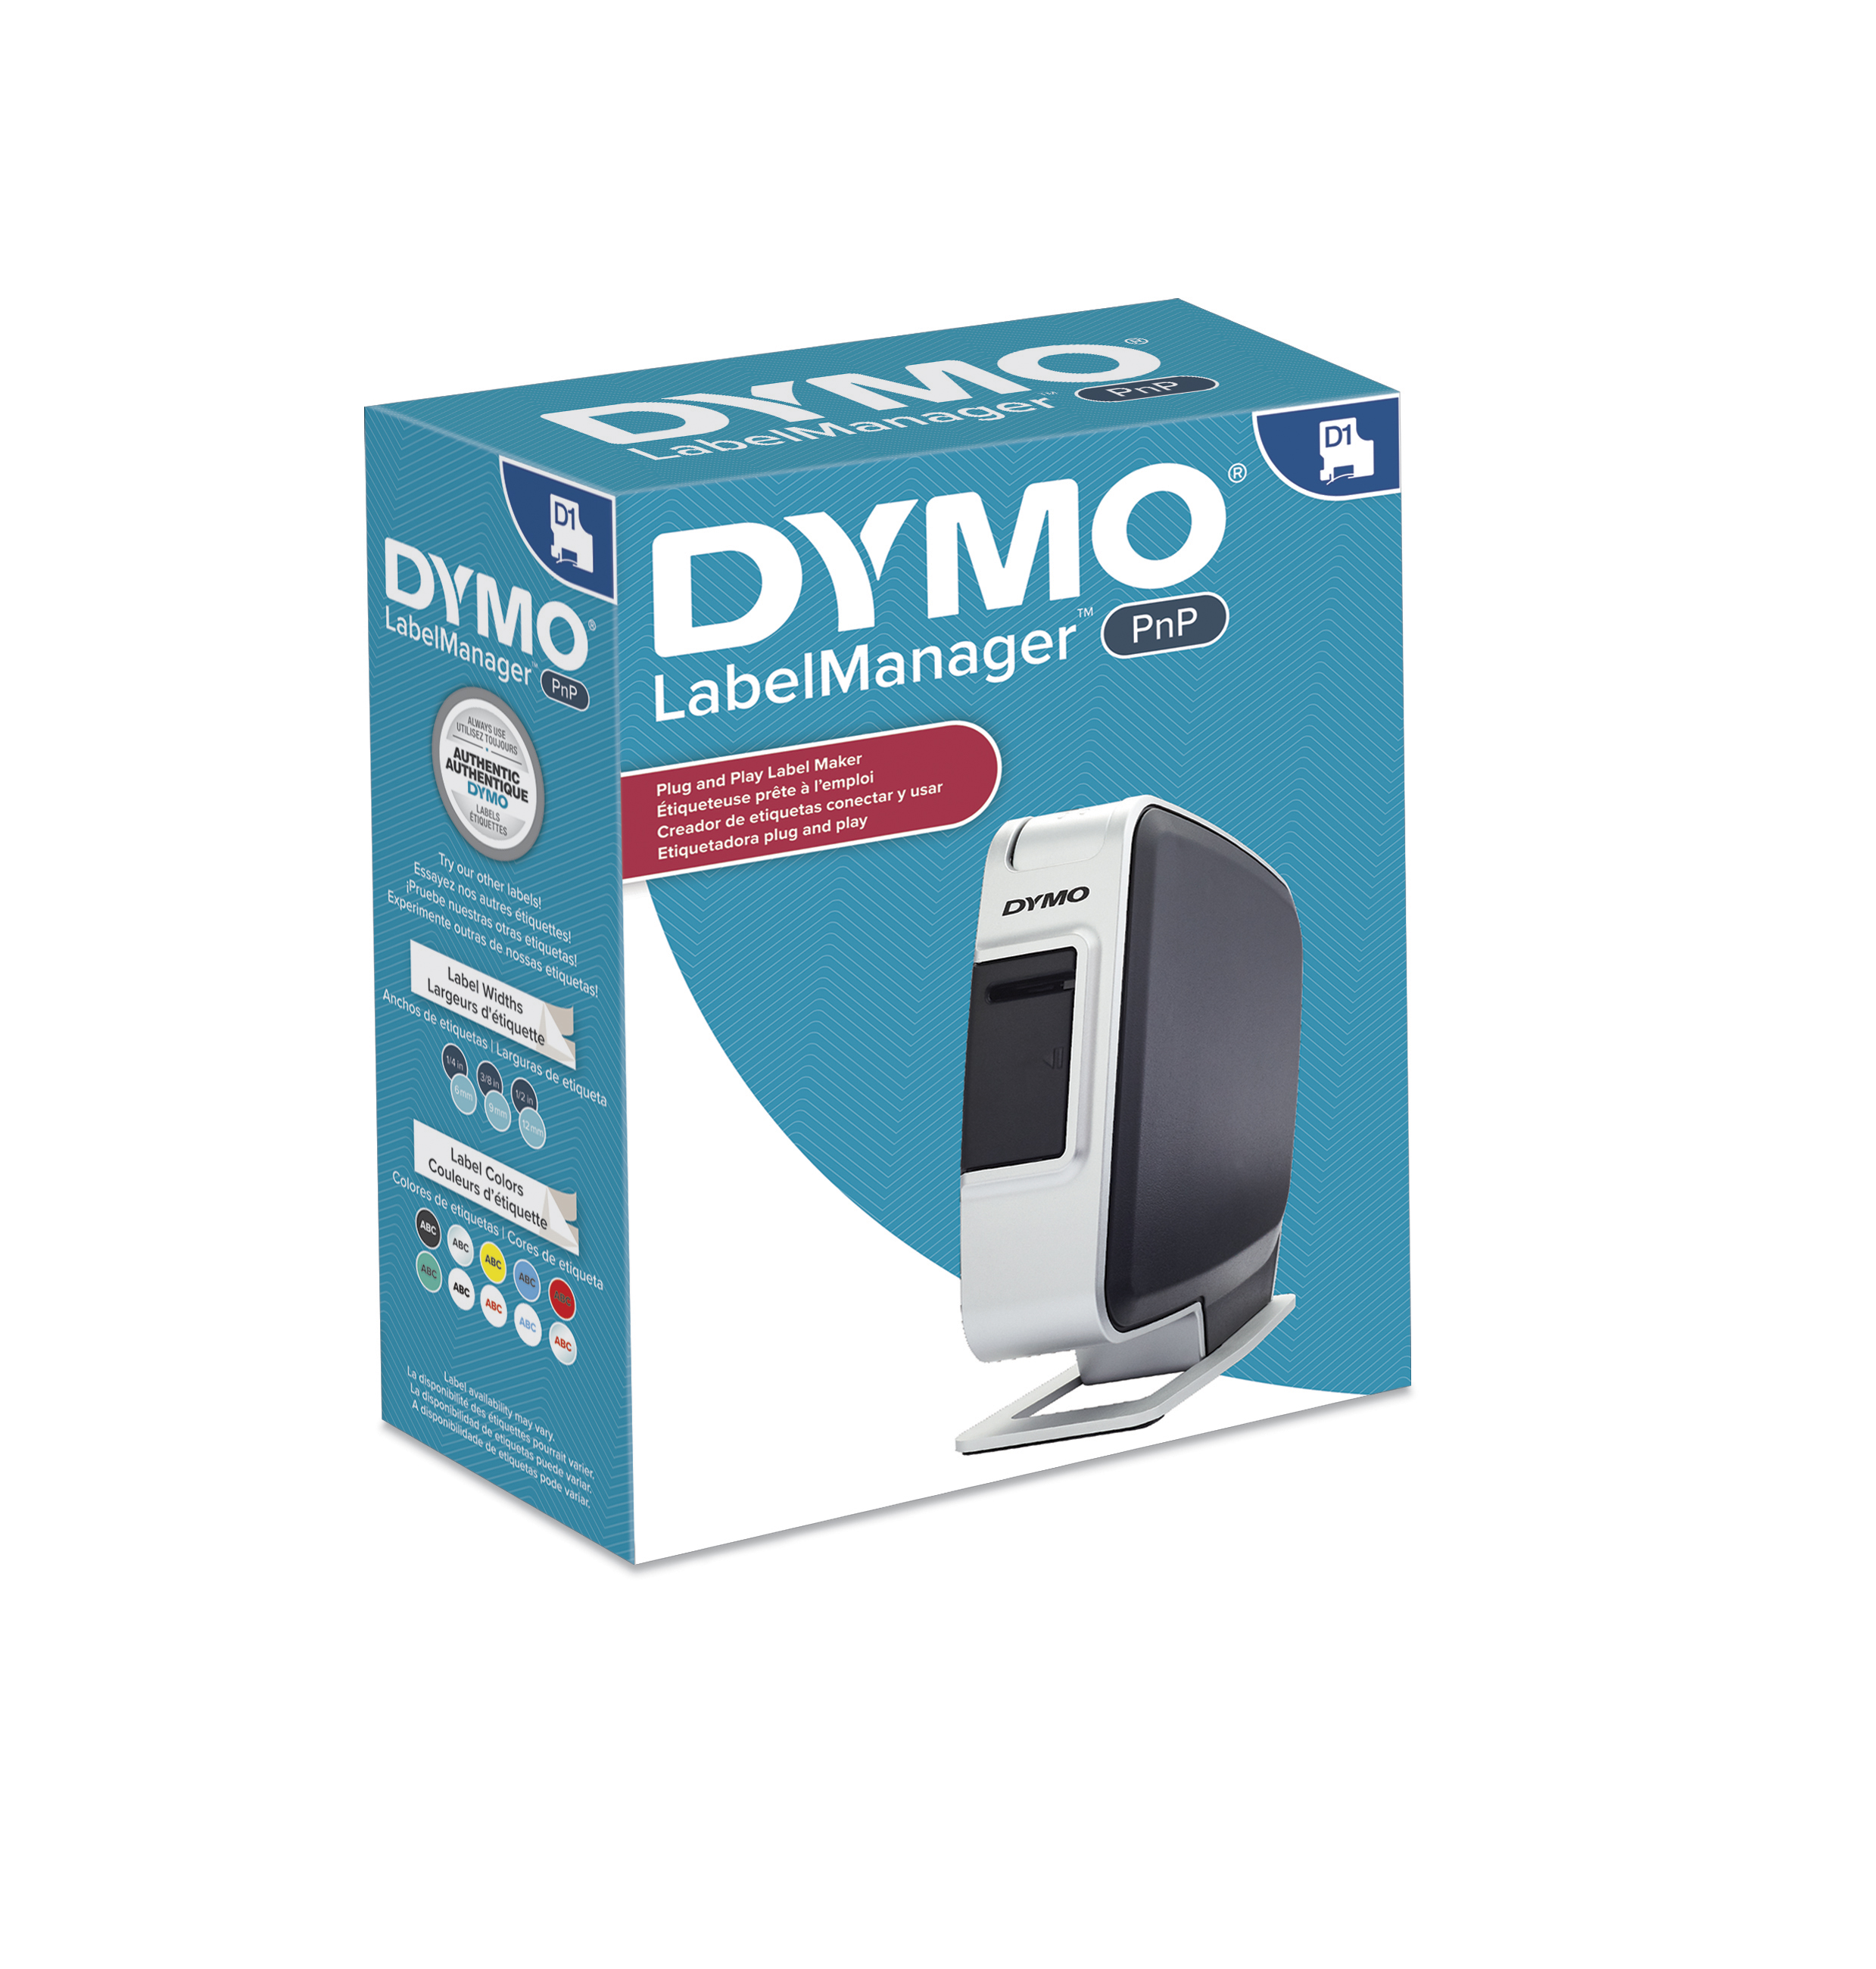 DYMO LabelManager Plug N Play Label Maker | Dymo